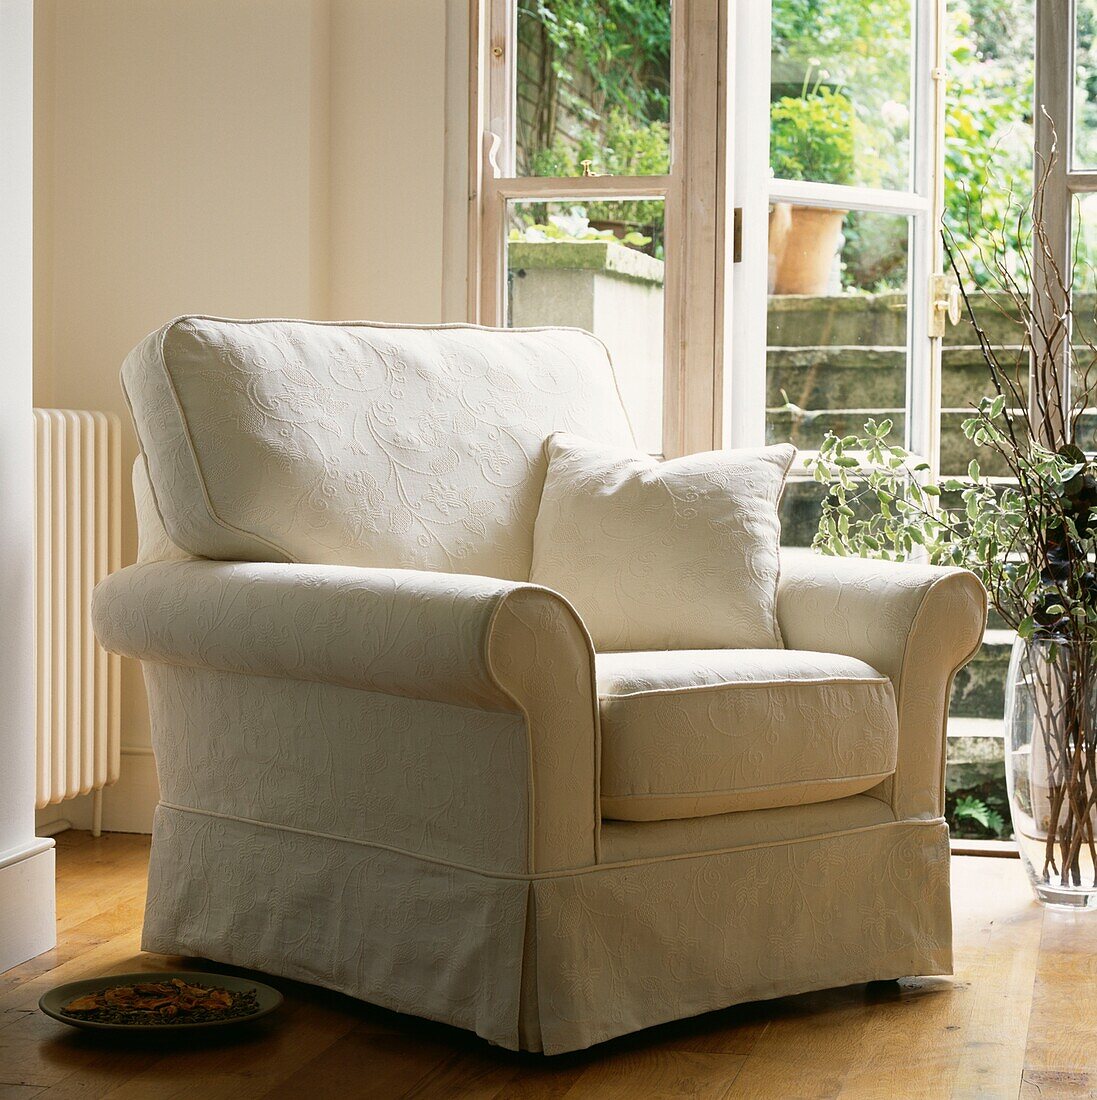 Cream upholstered armchair in basement widow